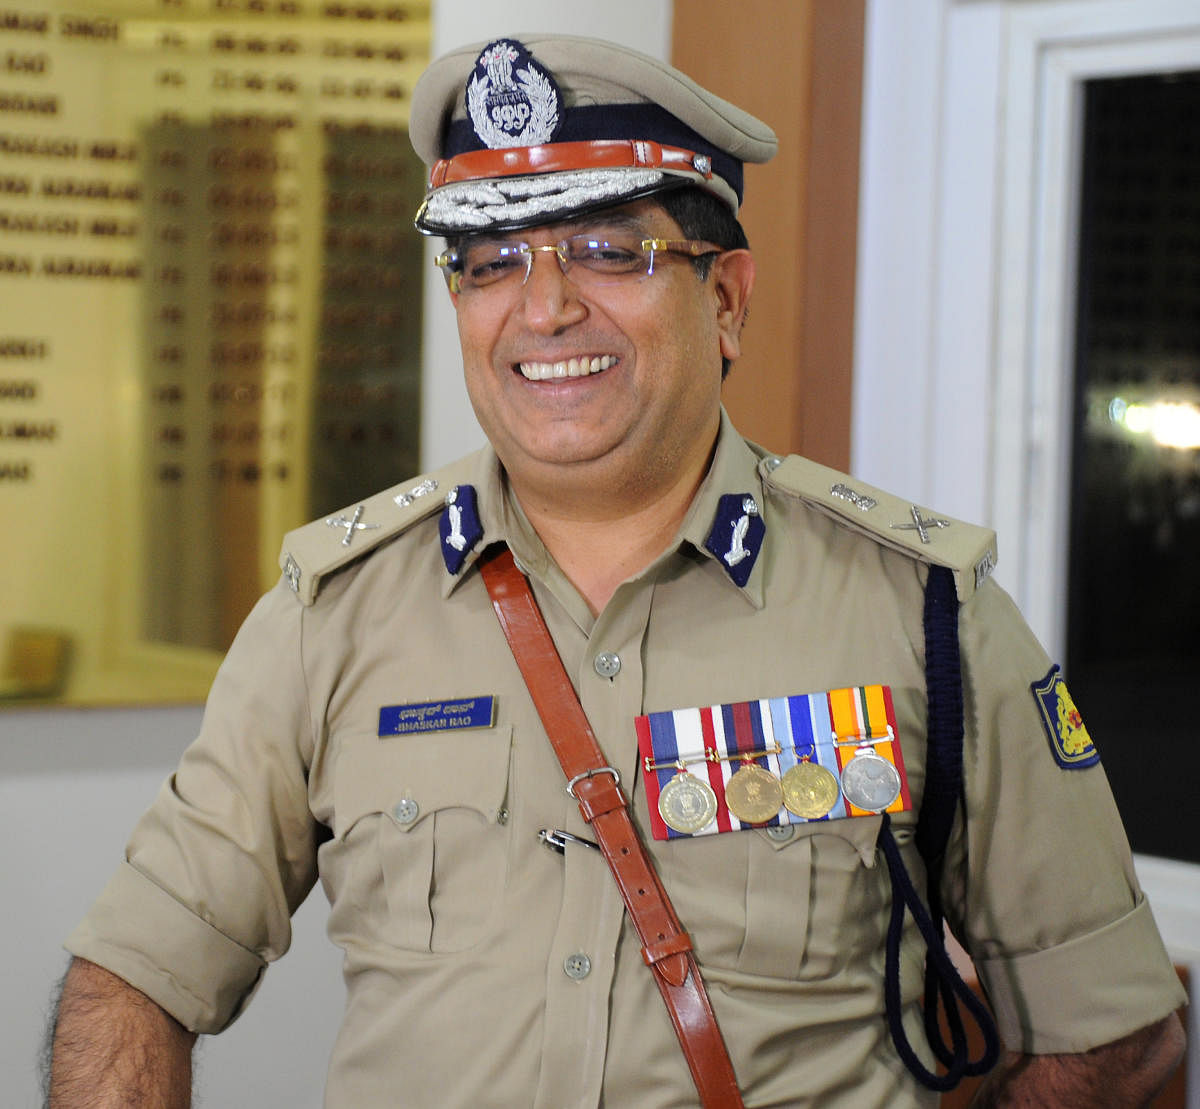 BhaskarRaois thenew citypolicecommissioner.